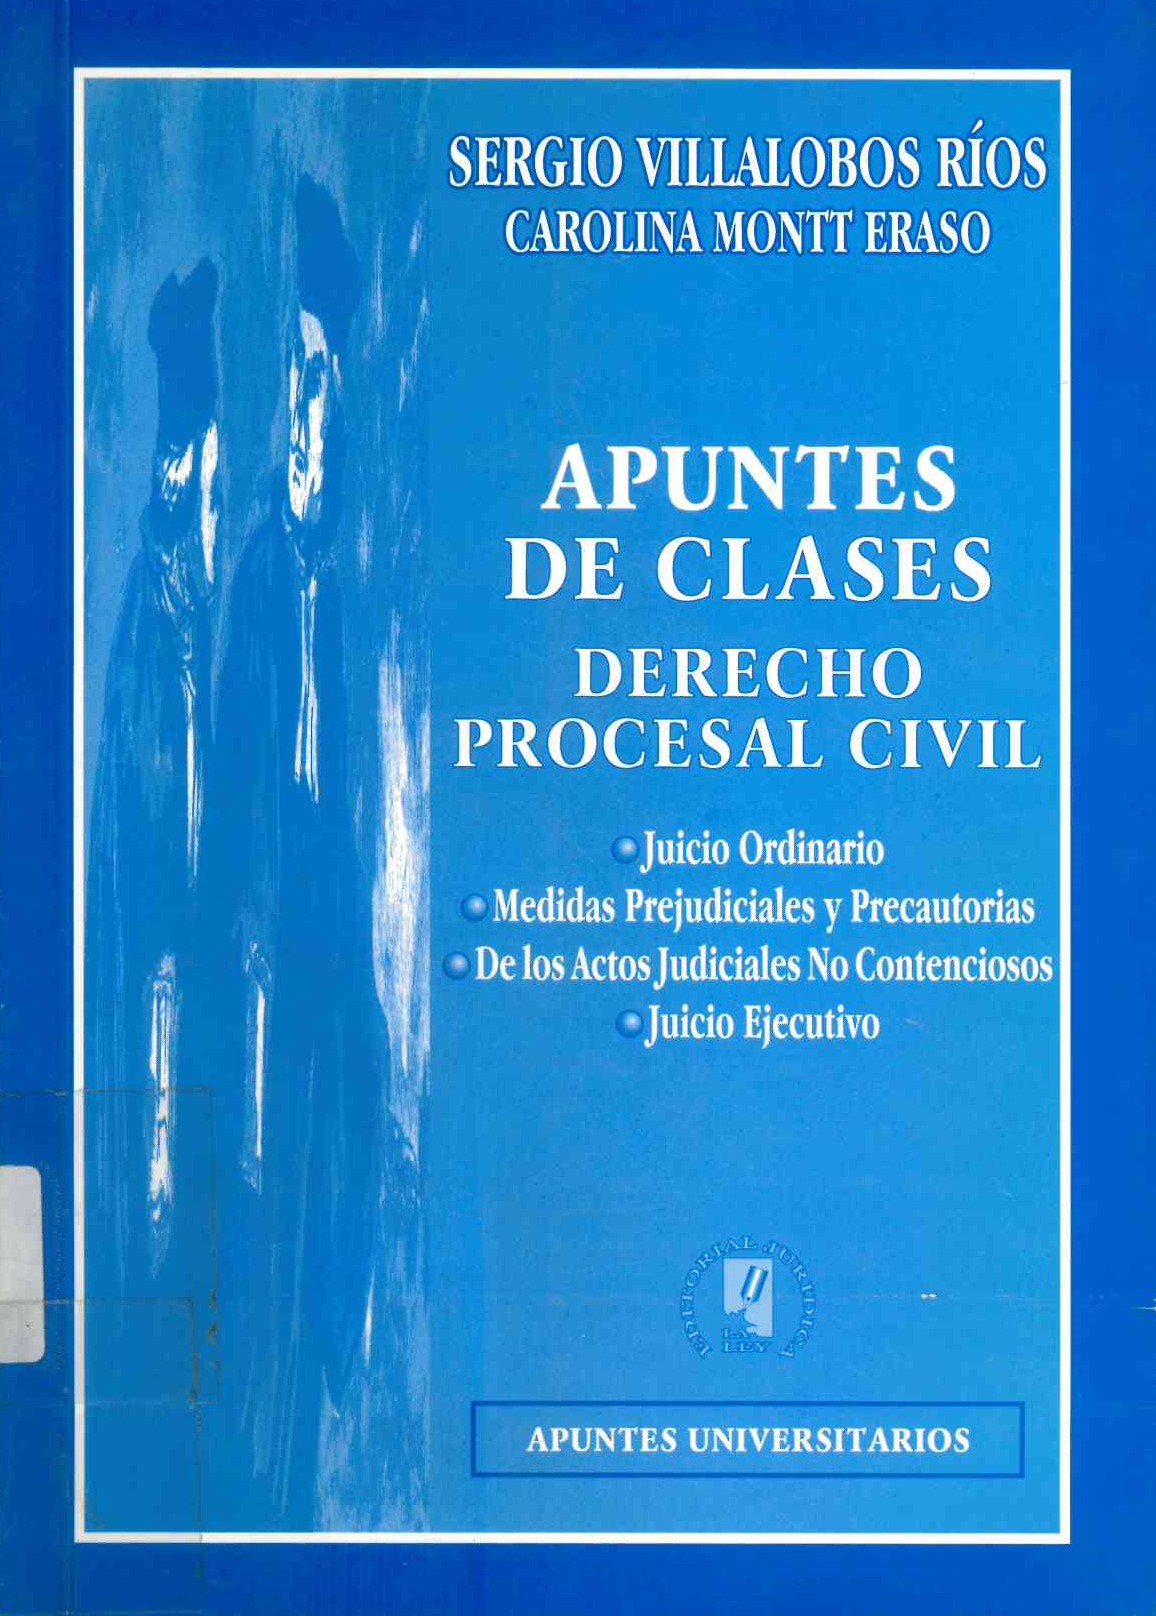 Apuntes de clases derecho procesal civil